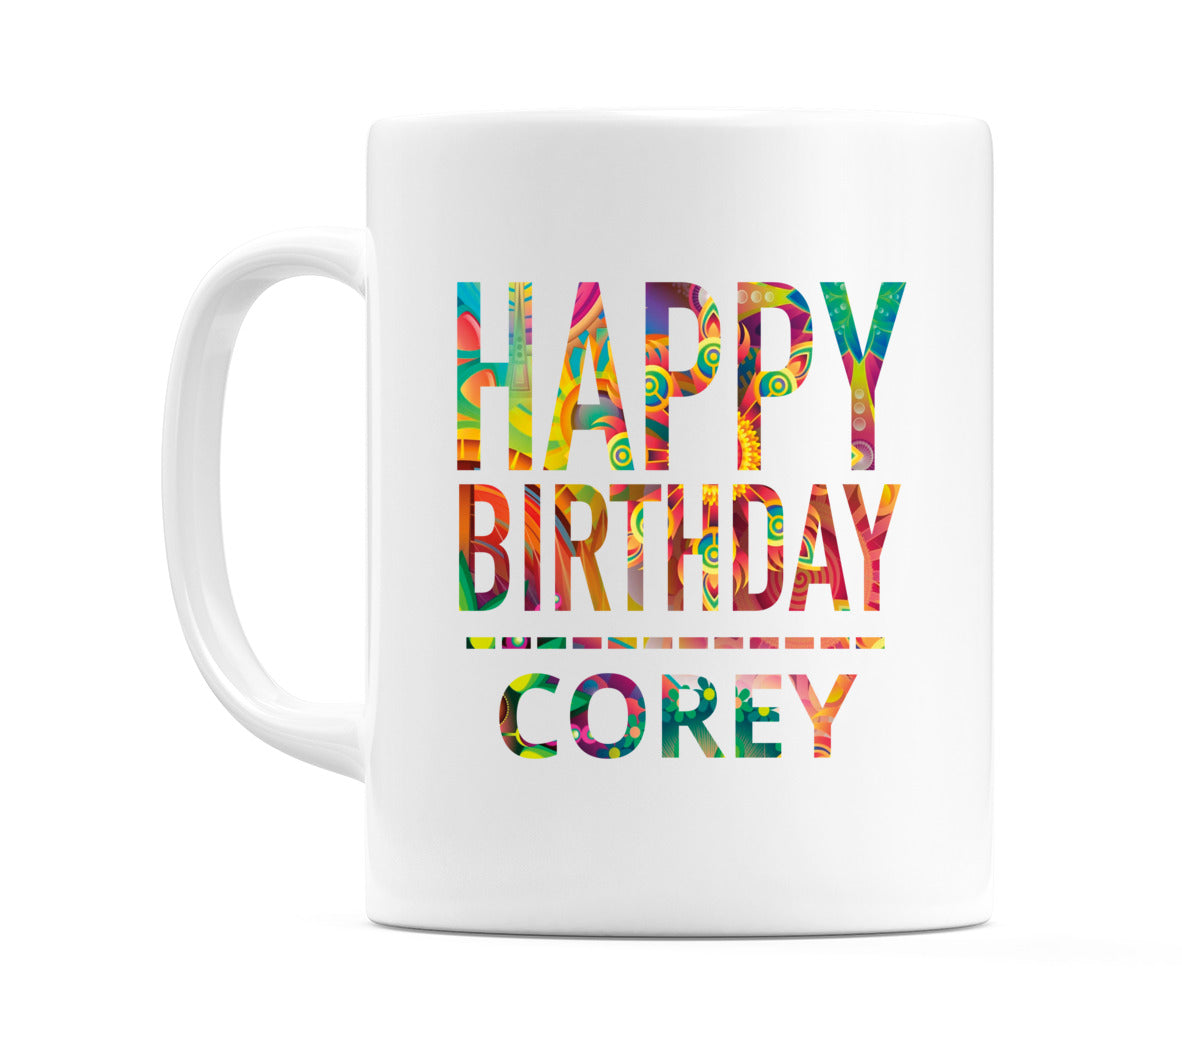 Happy Birthday Corey (Tie Dye Effect) Mug Cup by WeDoMugs